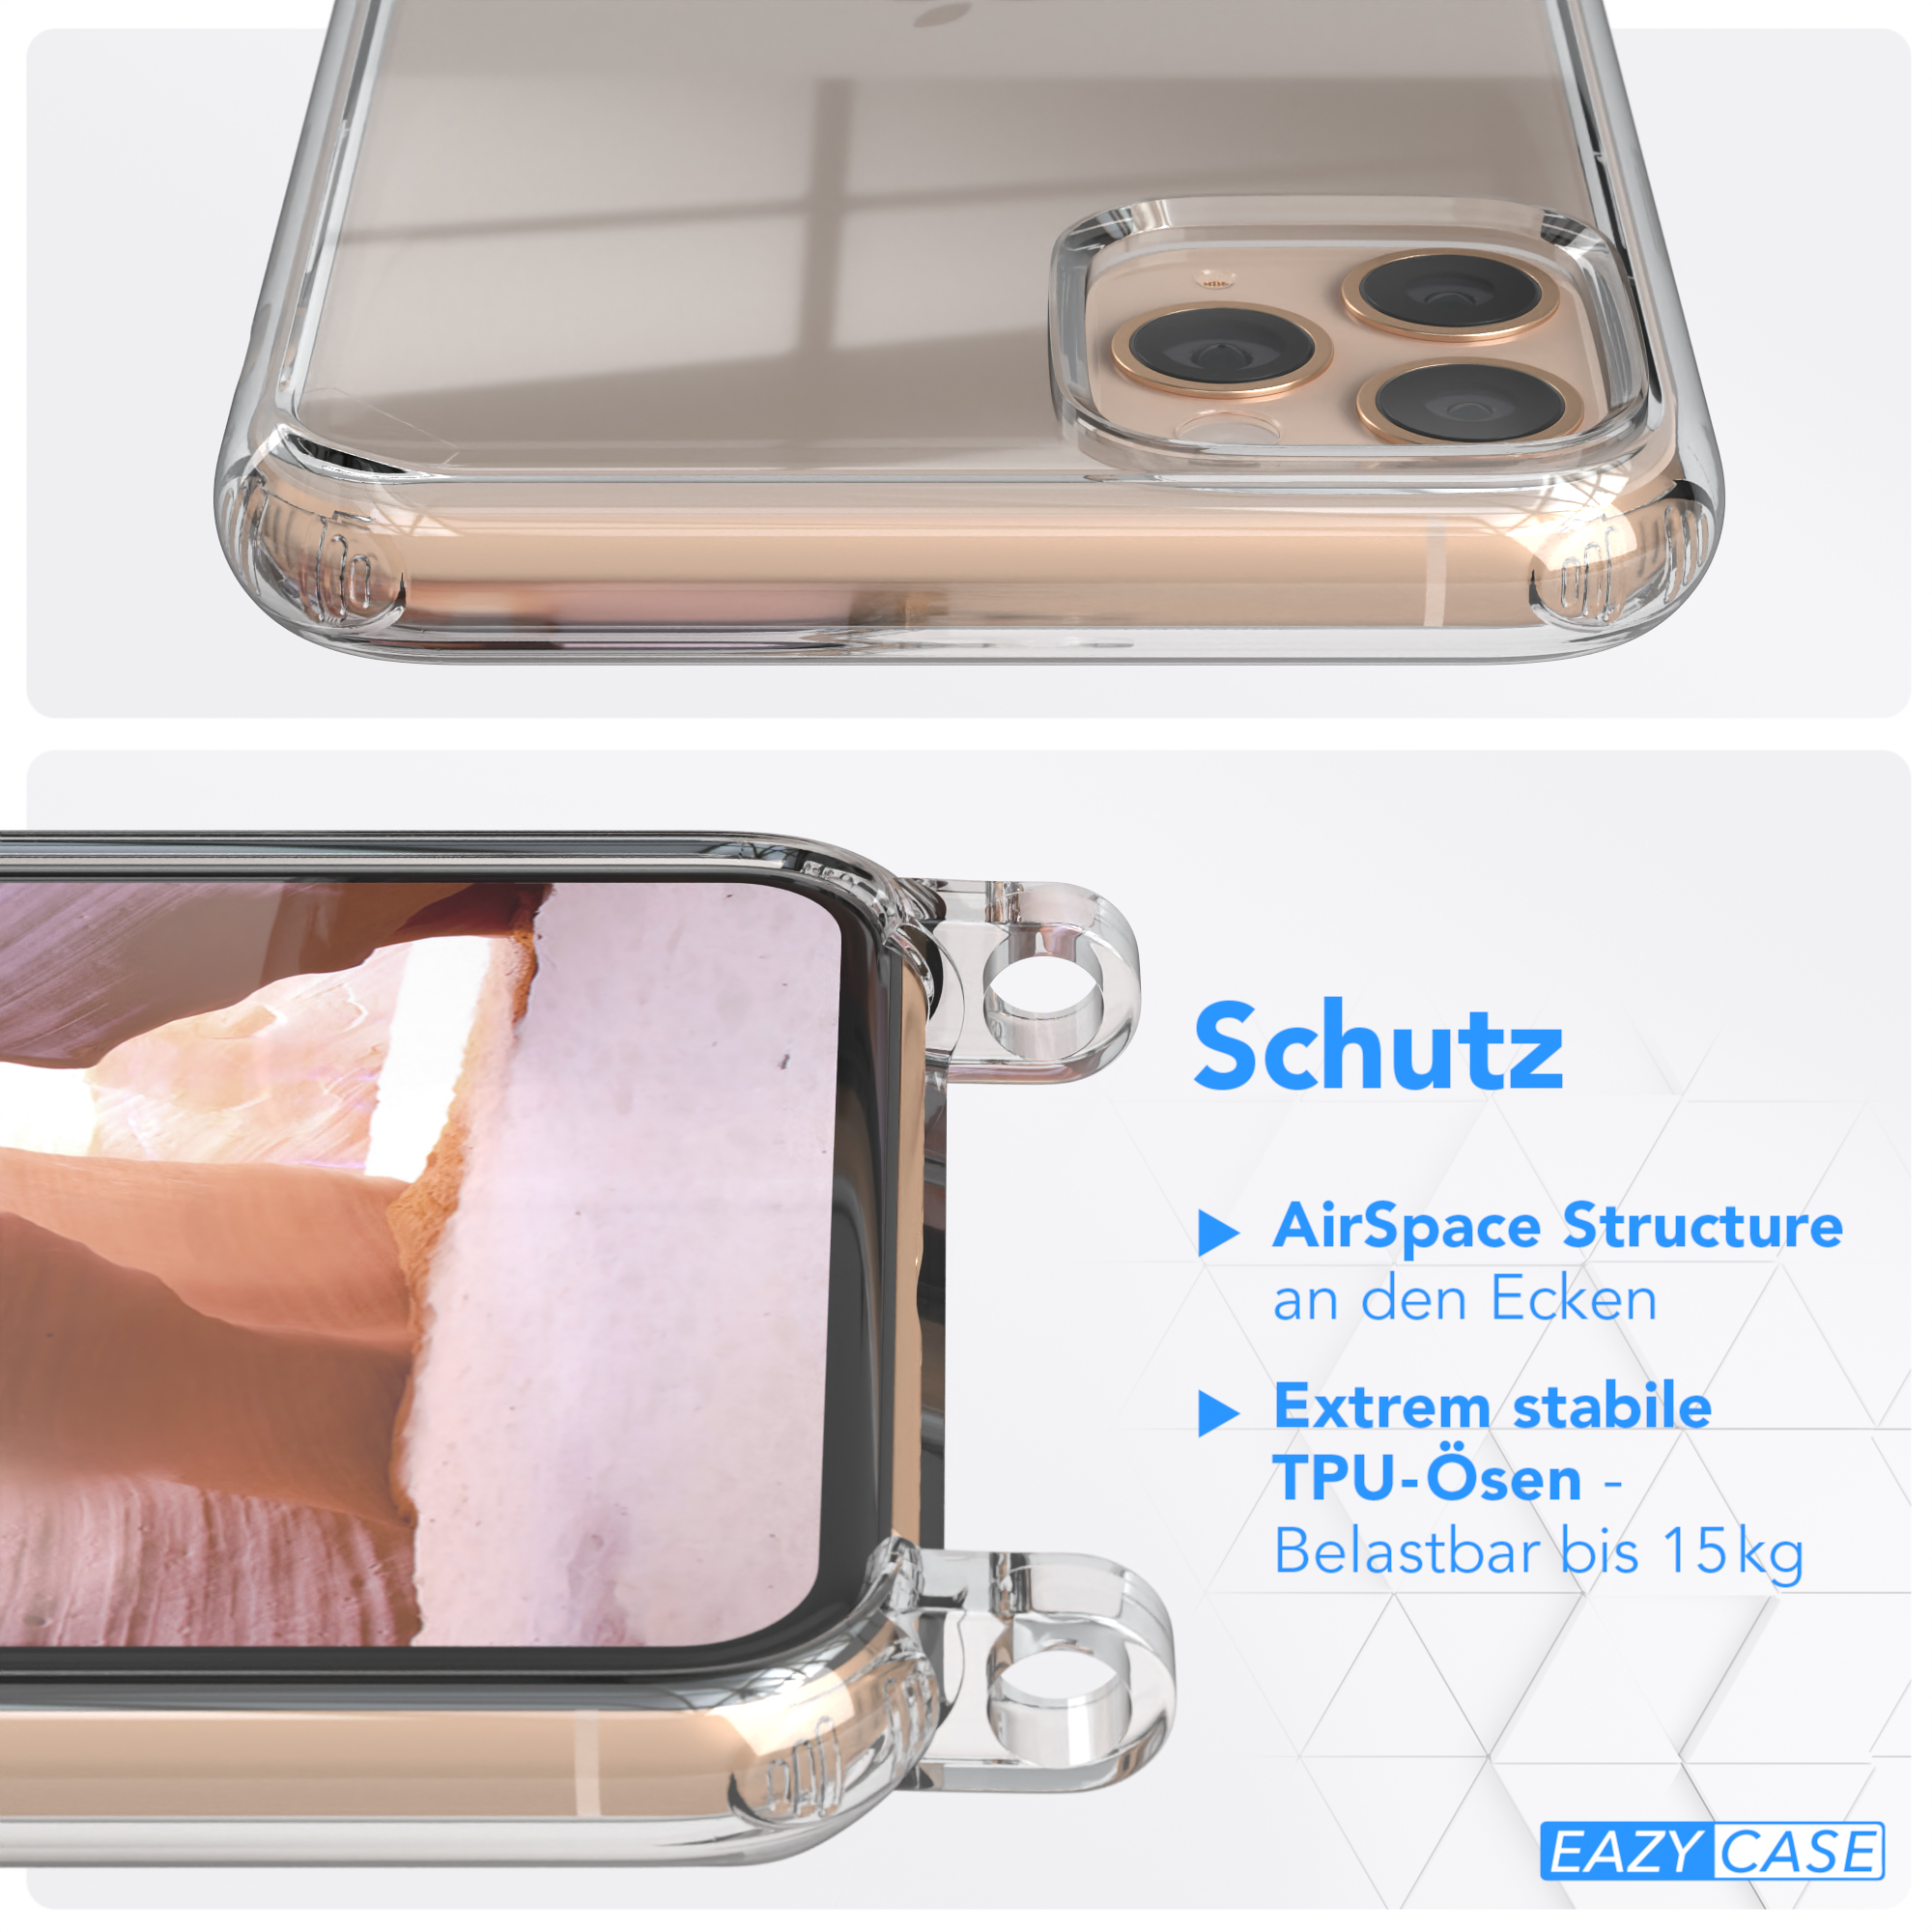 mit 11 + Apple, Max, Kordel / Umhängetasche, runder iPhone Handyhülle Gold Transparente EAZY Karabiner, Altrosa Pro CASE